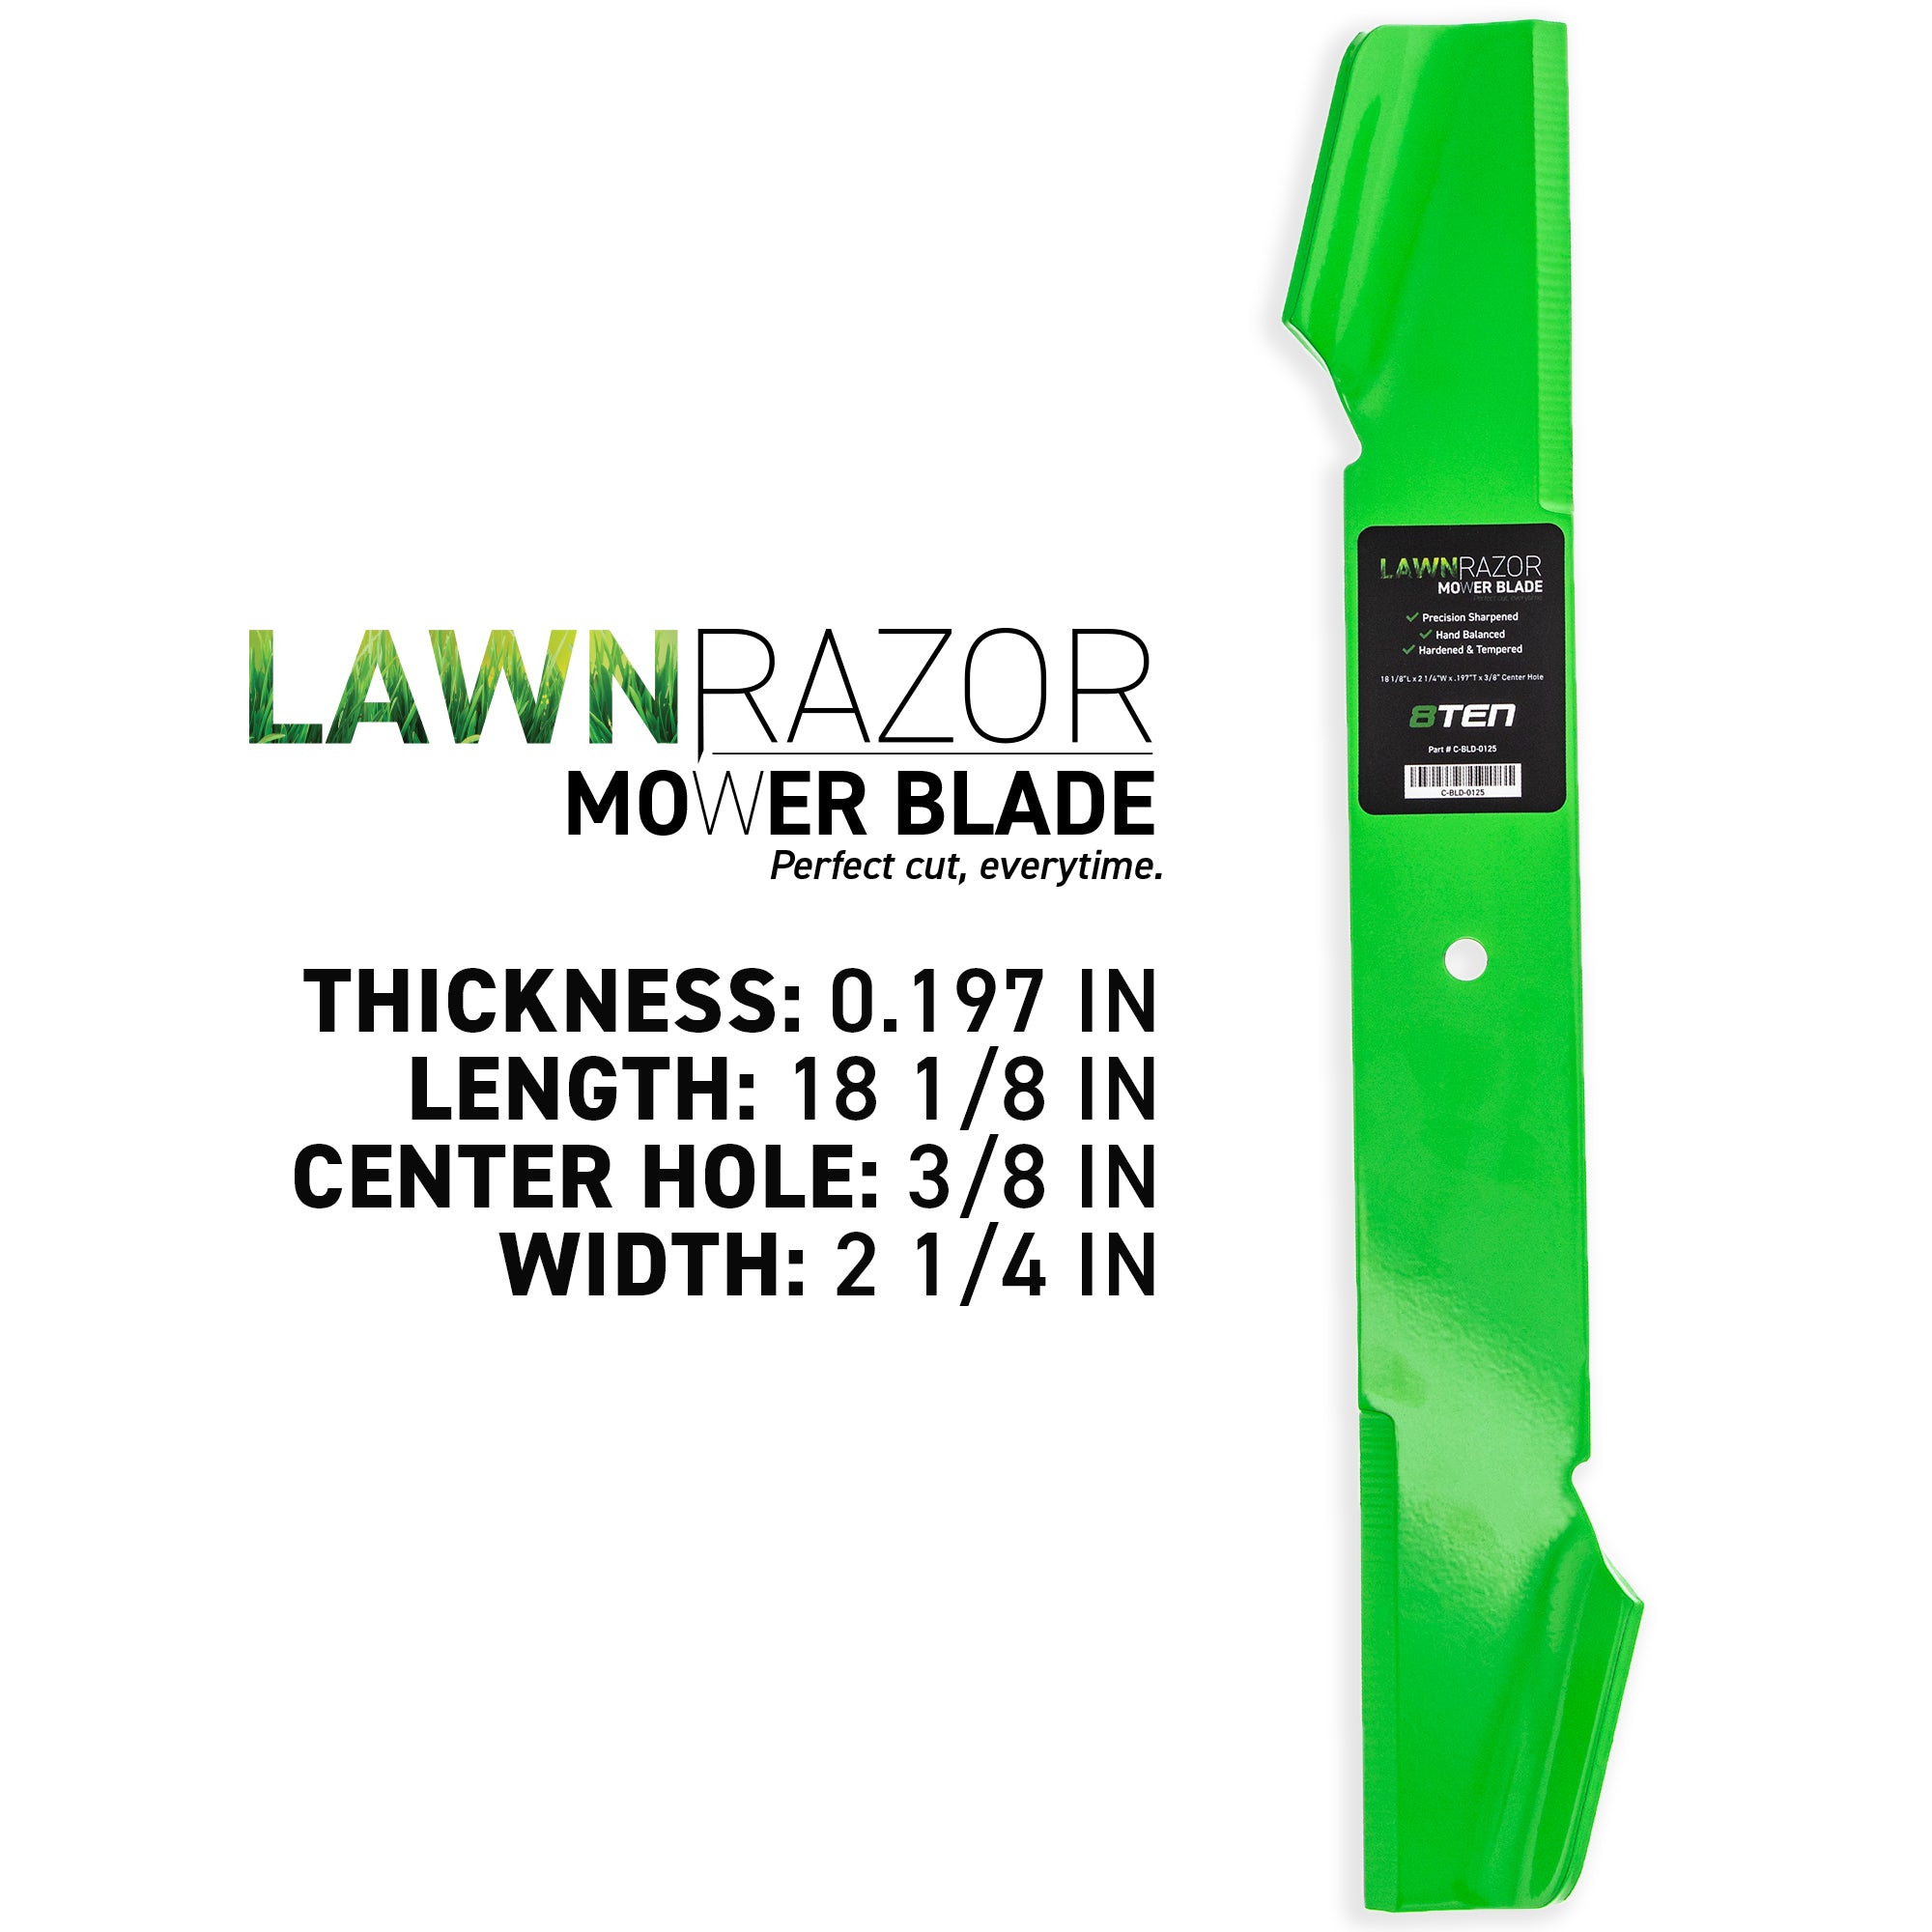 8TEN LawnRAZOR Mower Blade 2-Pack 532131321 120262X